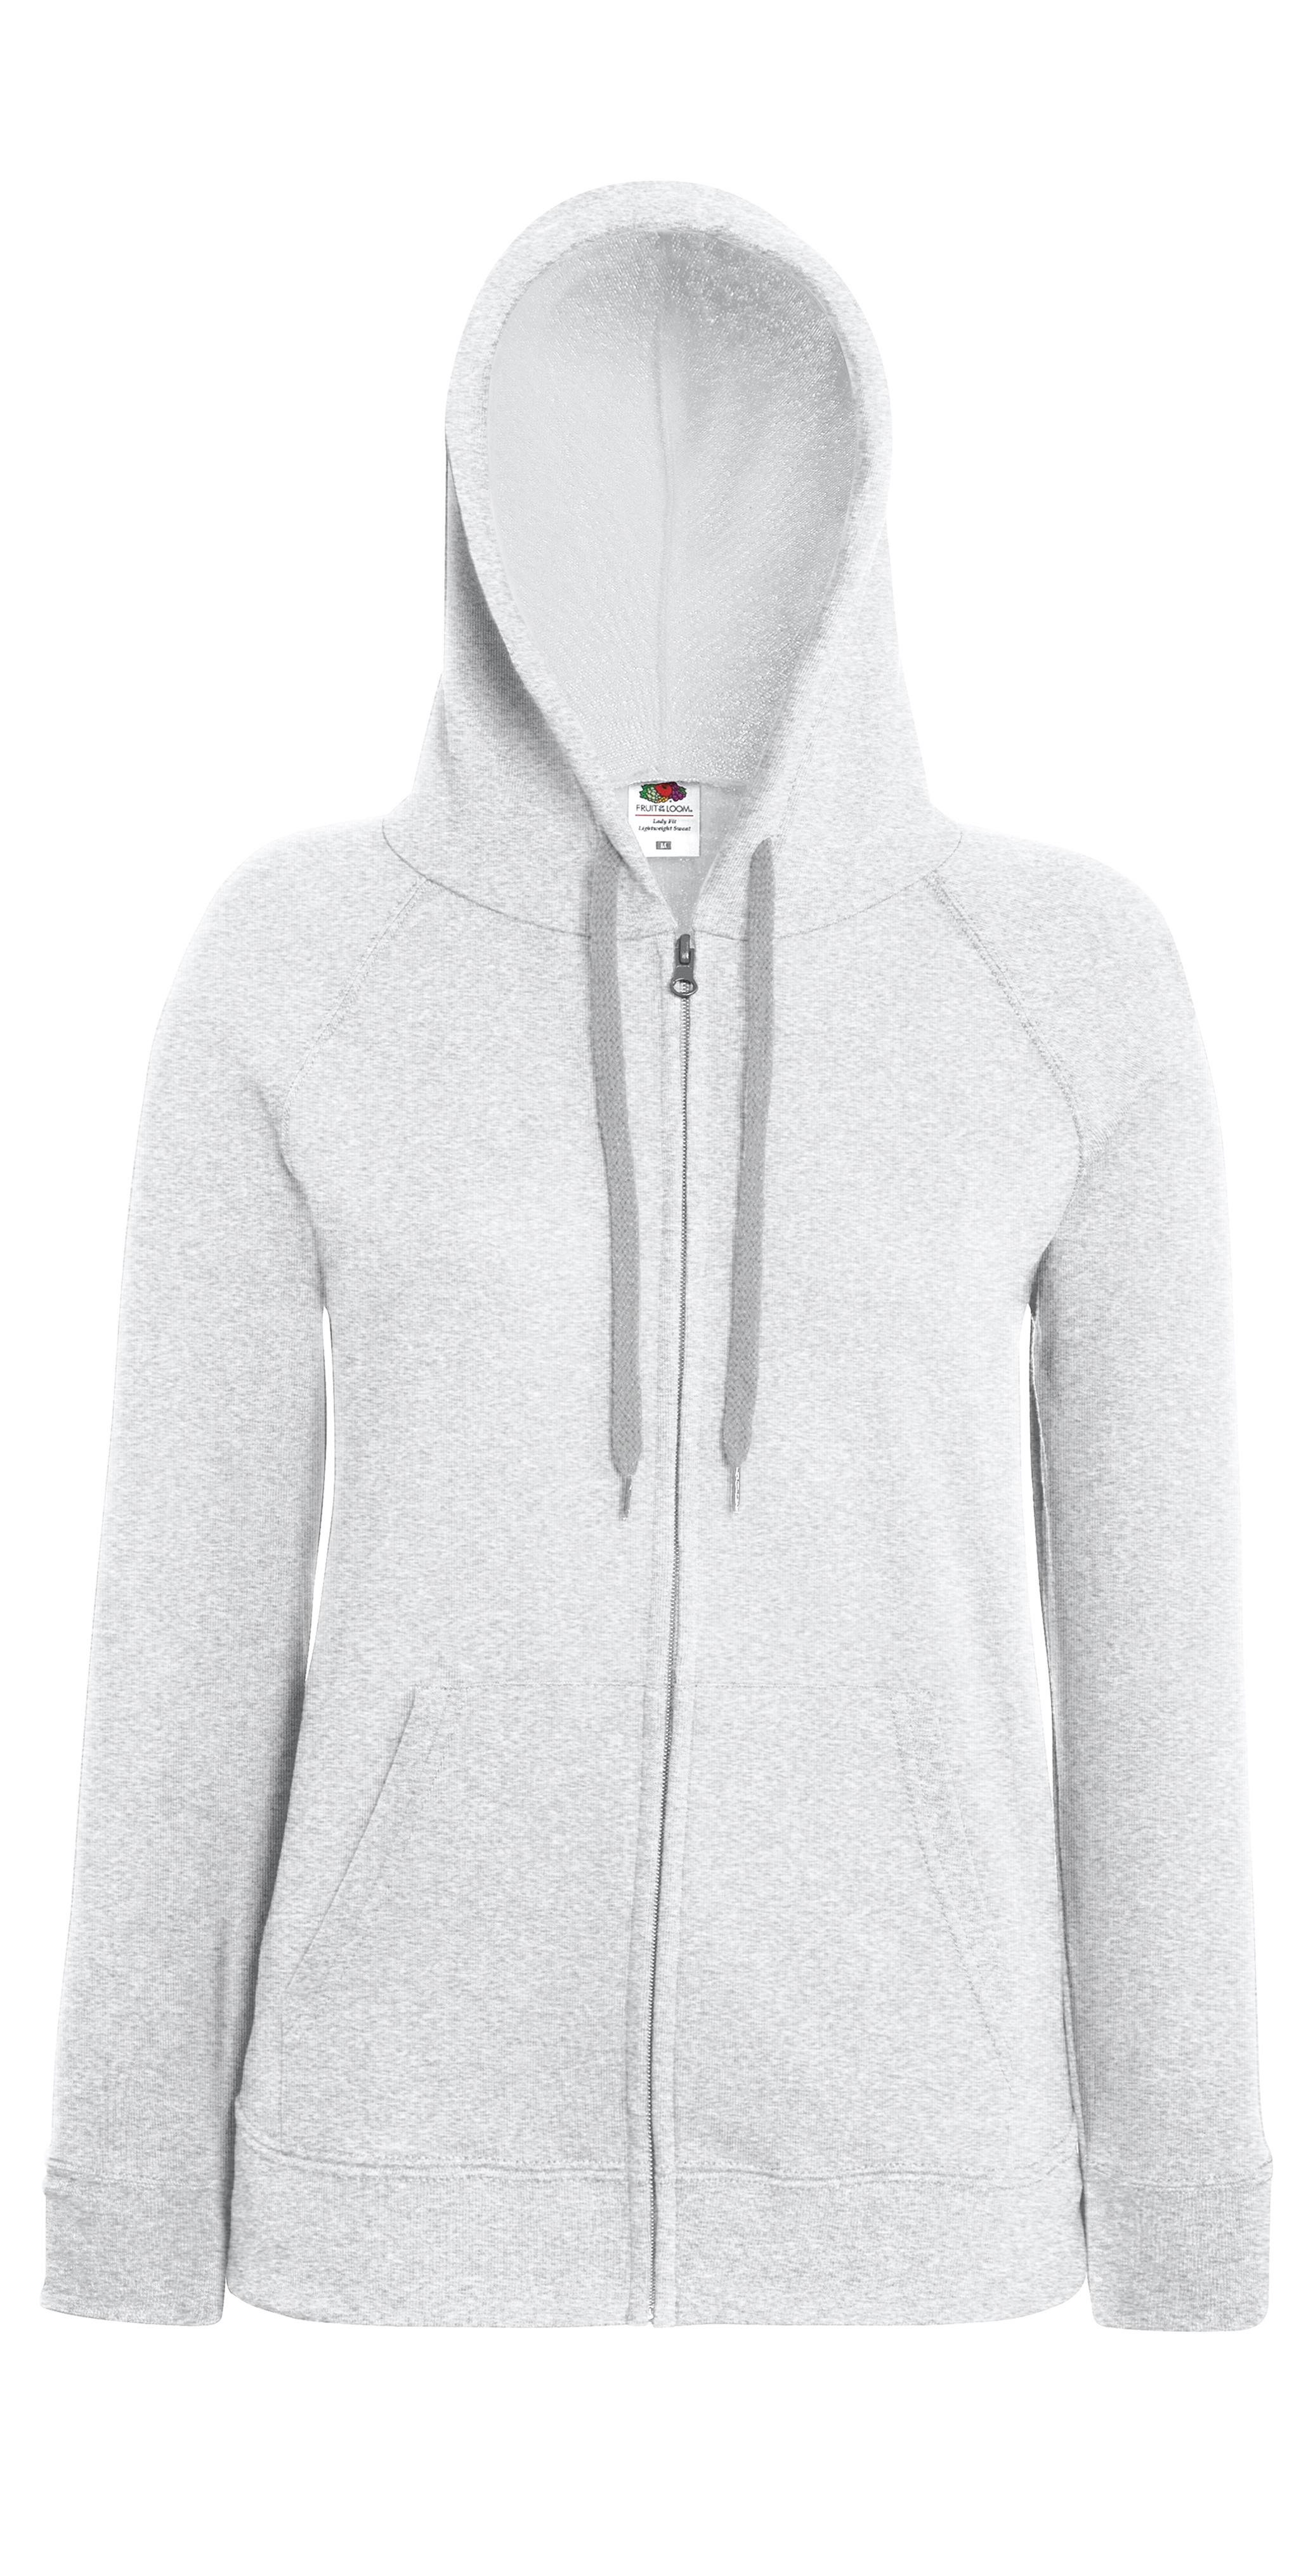 ax-httpswebsystems.s3.amazonaws.comtmp_for_downloadfruit-of-the-loom-womens-lightweight-hooded-sweatshirt-jacket-heather-grey.jpeg